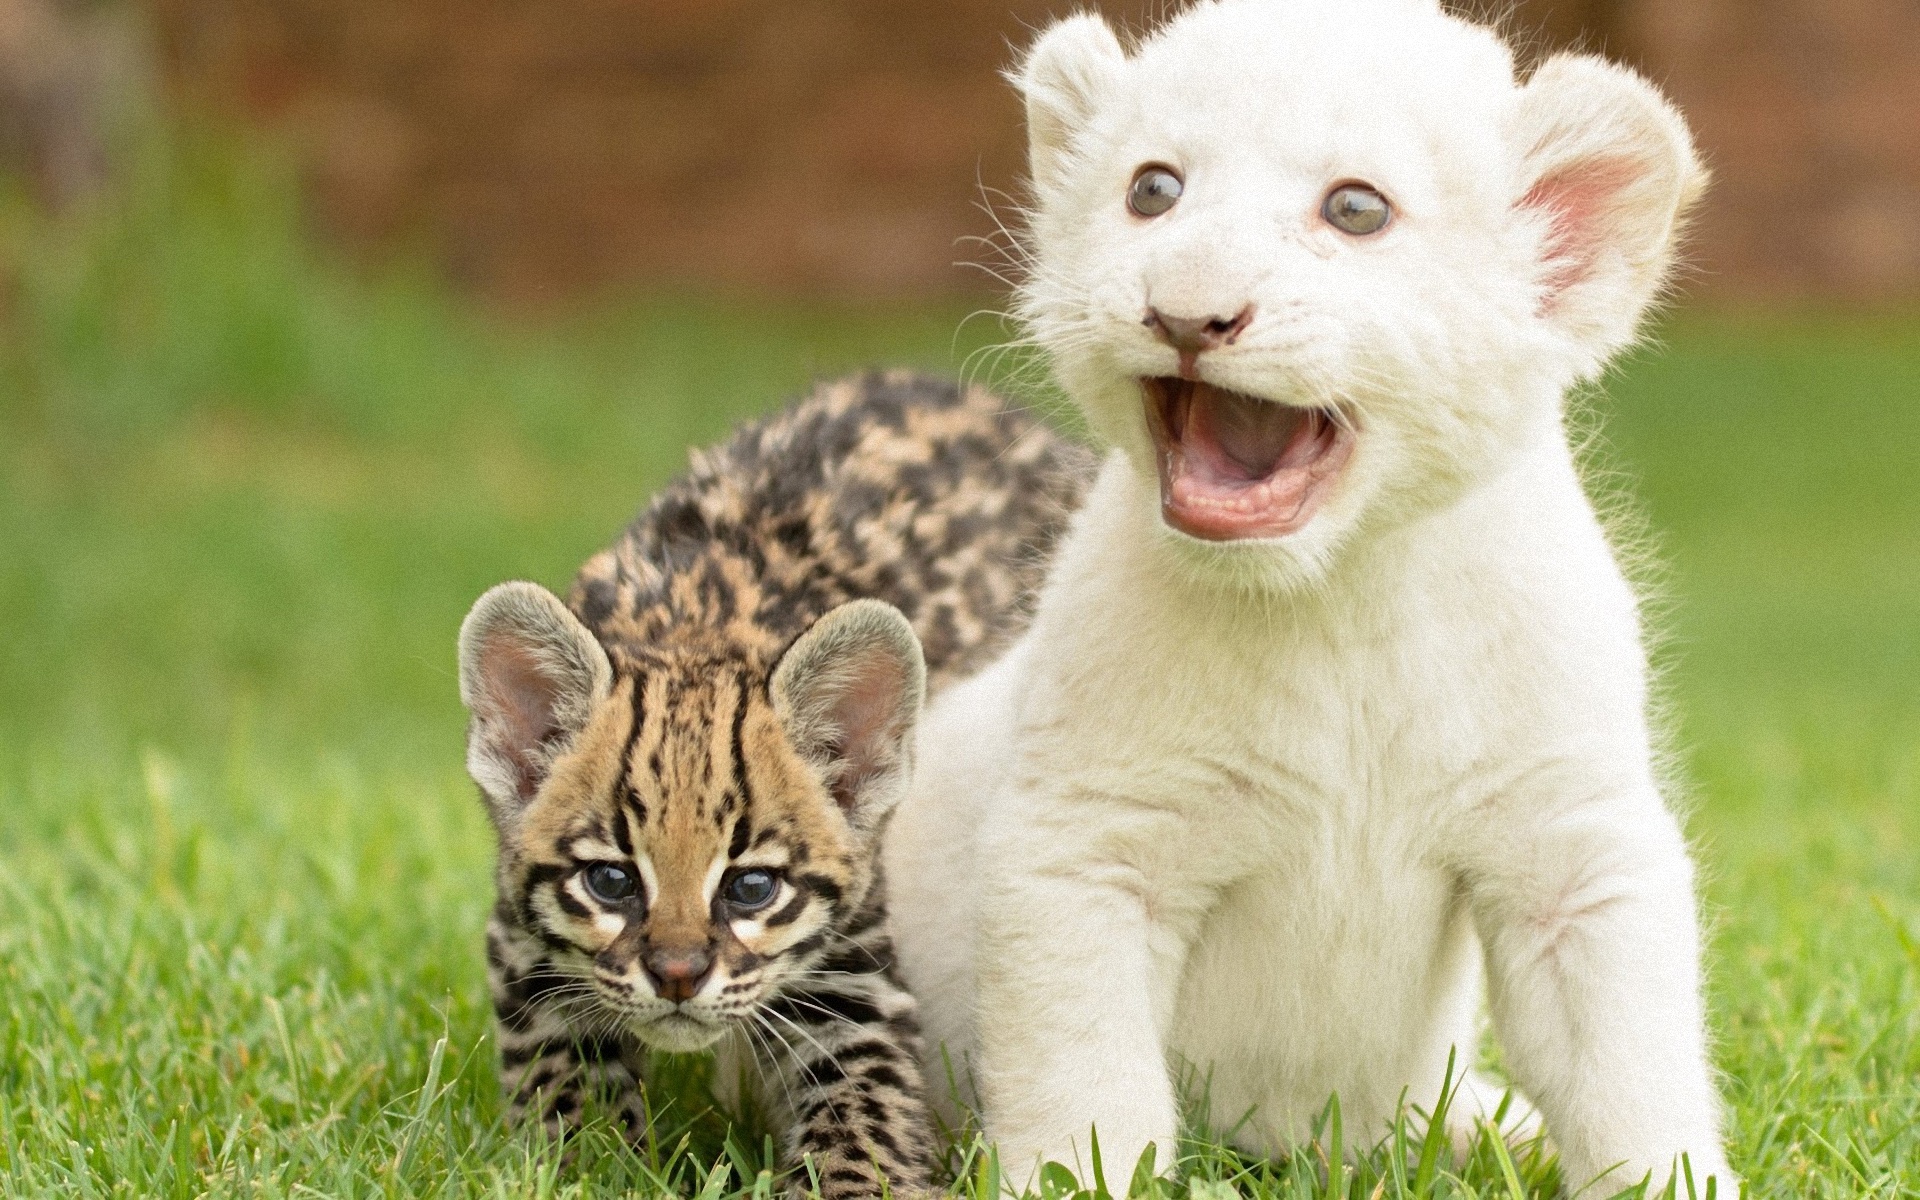 Wallpapers tiger cheetah kittens on the desktop